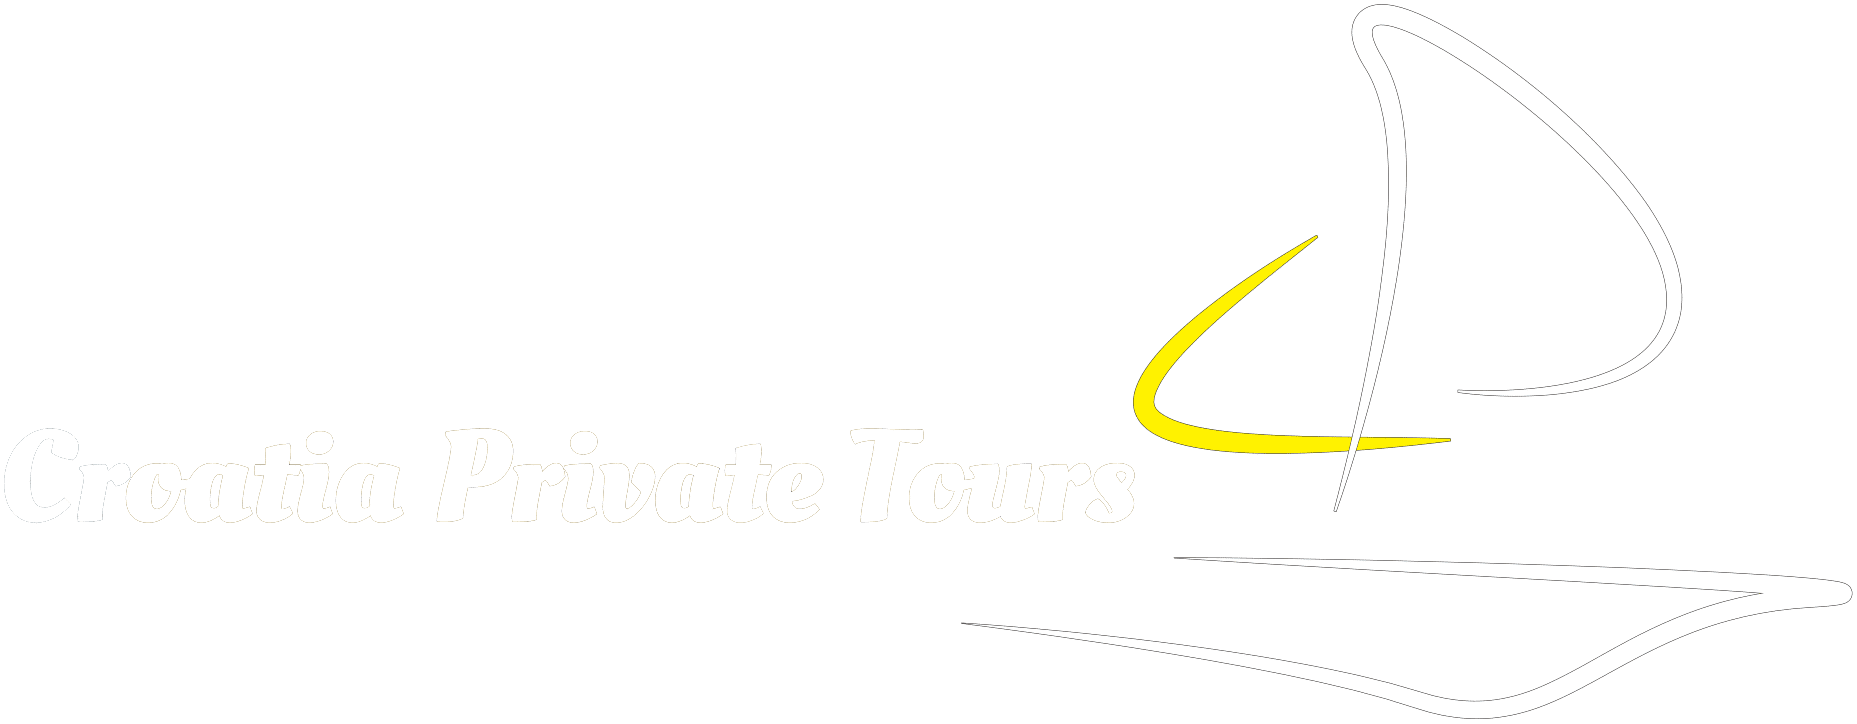 Croatia Private tours tailor-made tours in Croatia logo